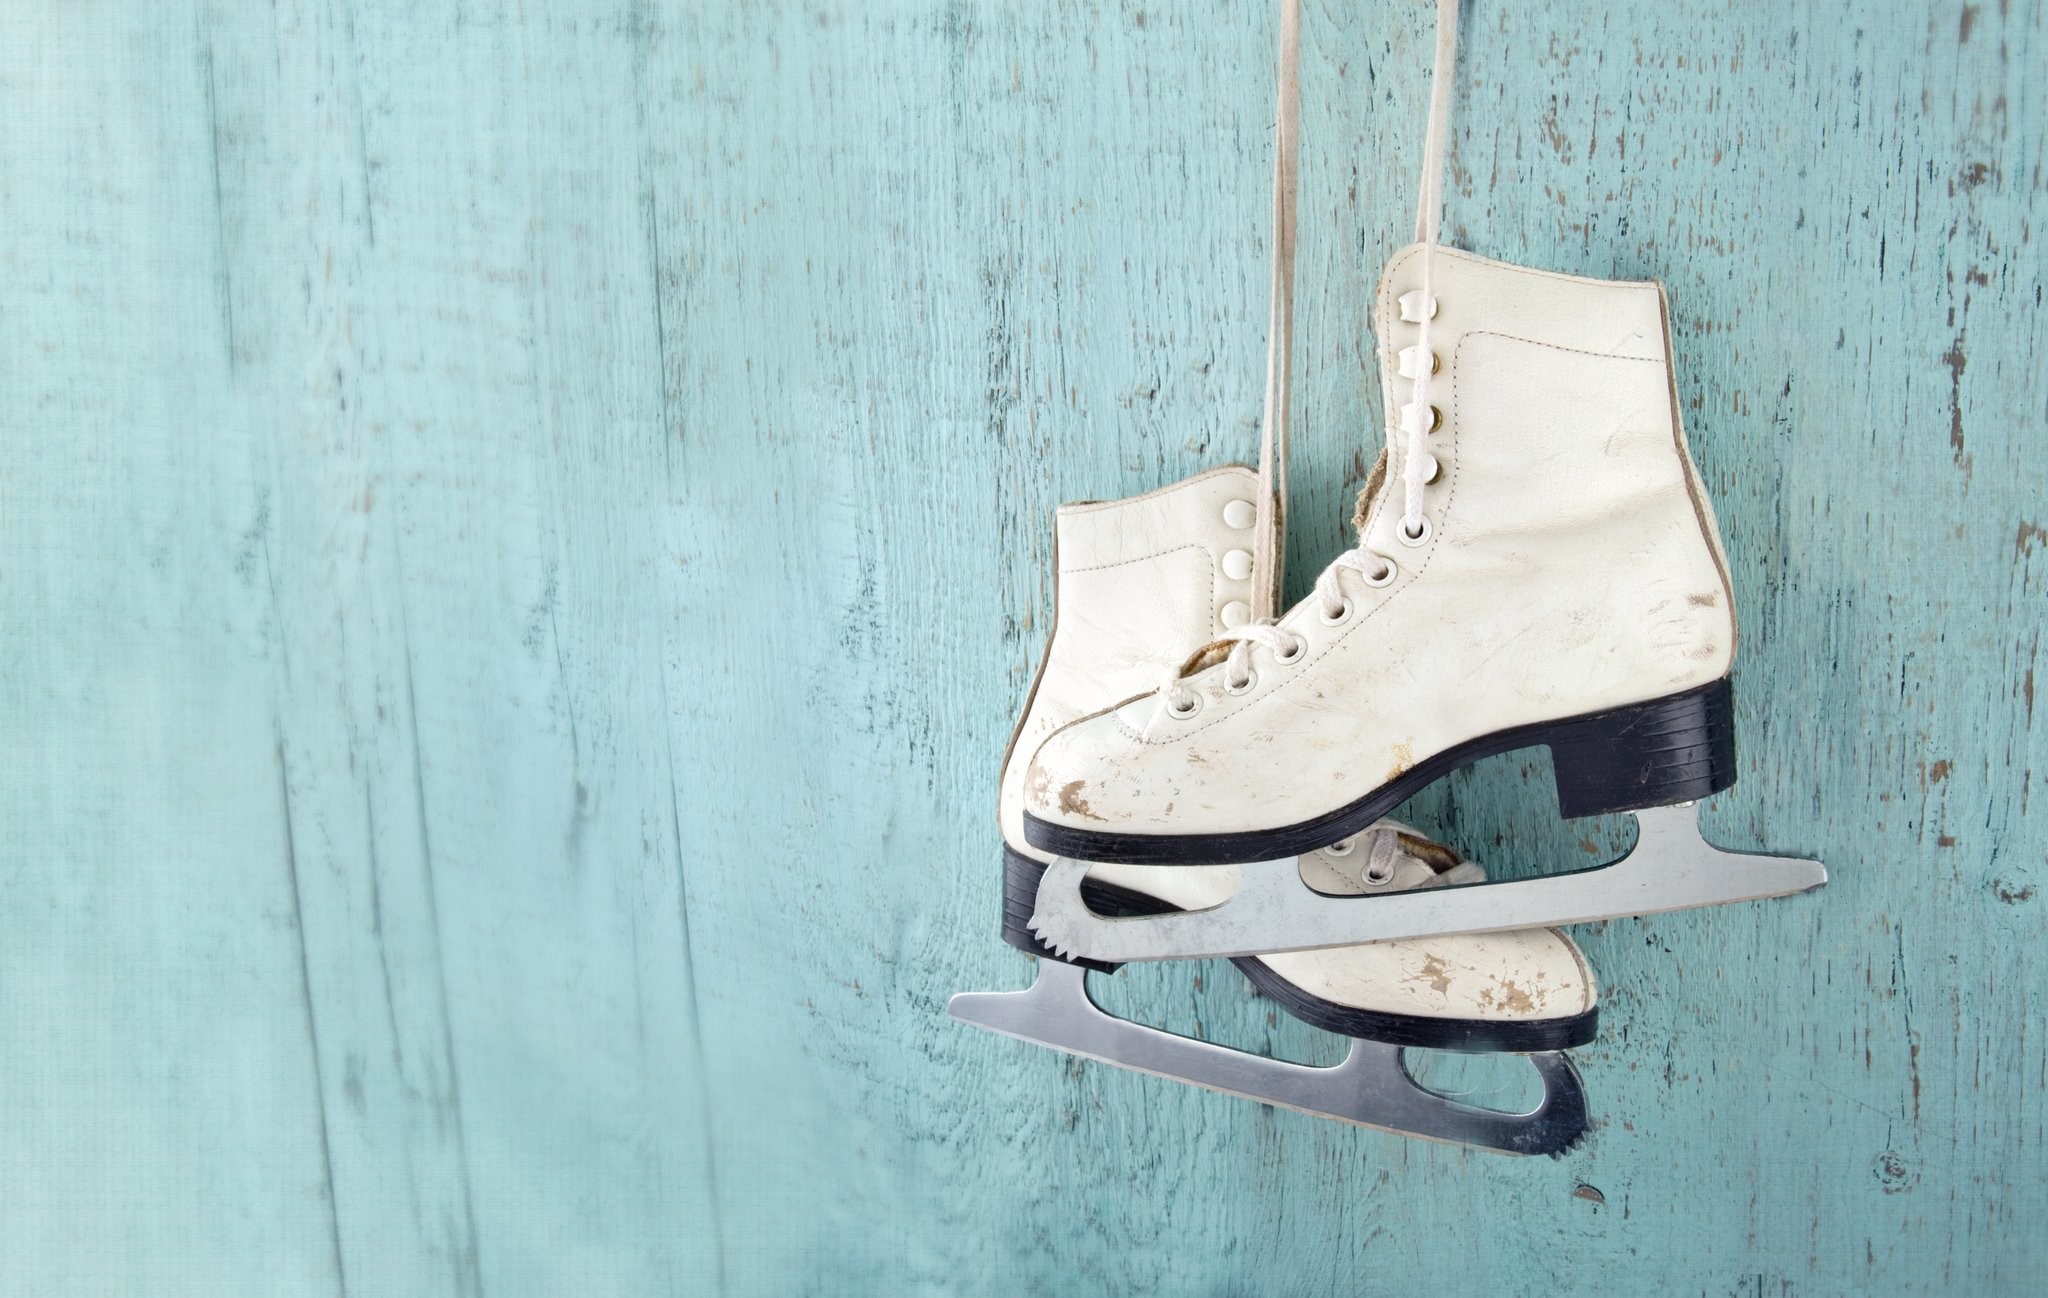 ice skating wallpaper,figure skate,footwear,ice hockey equipment,ice skate,white